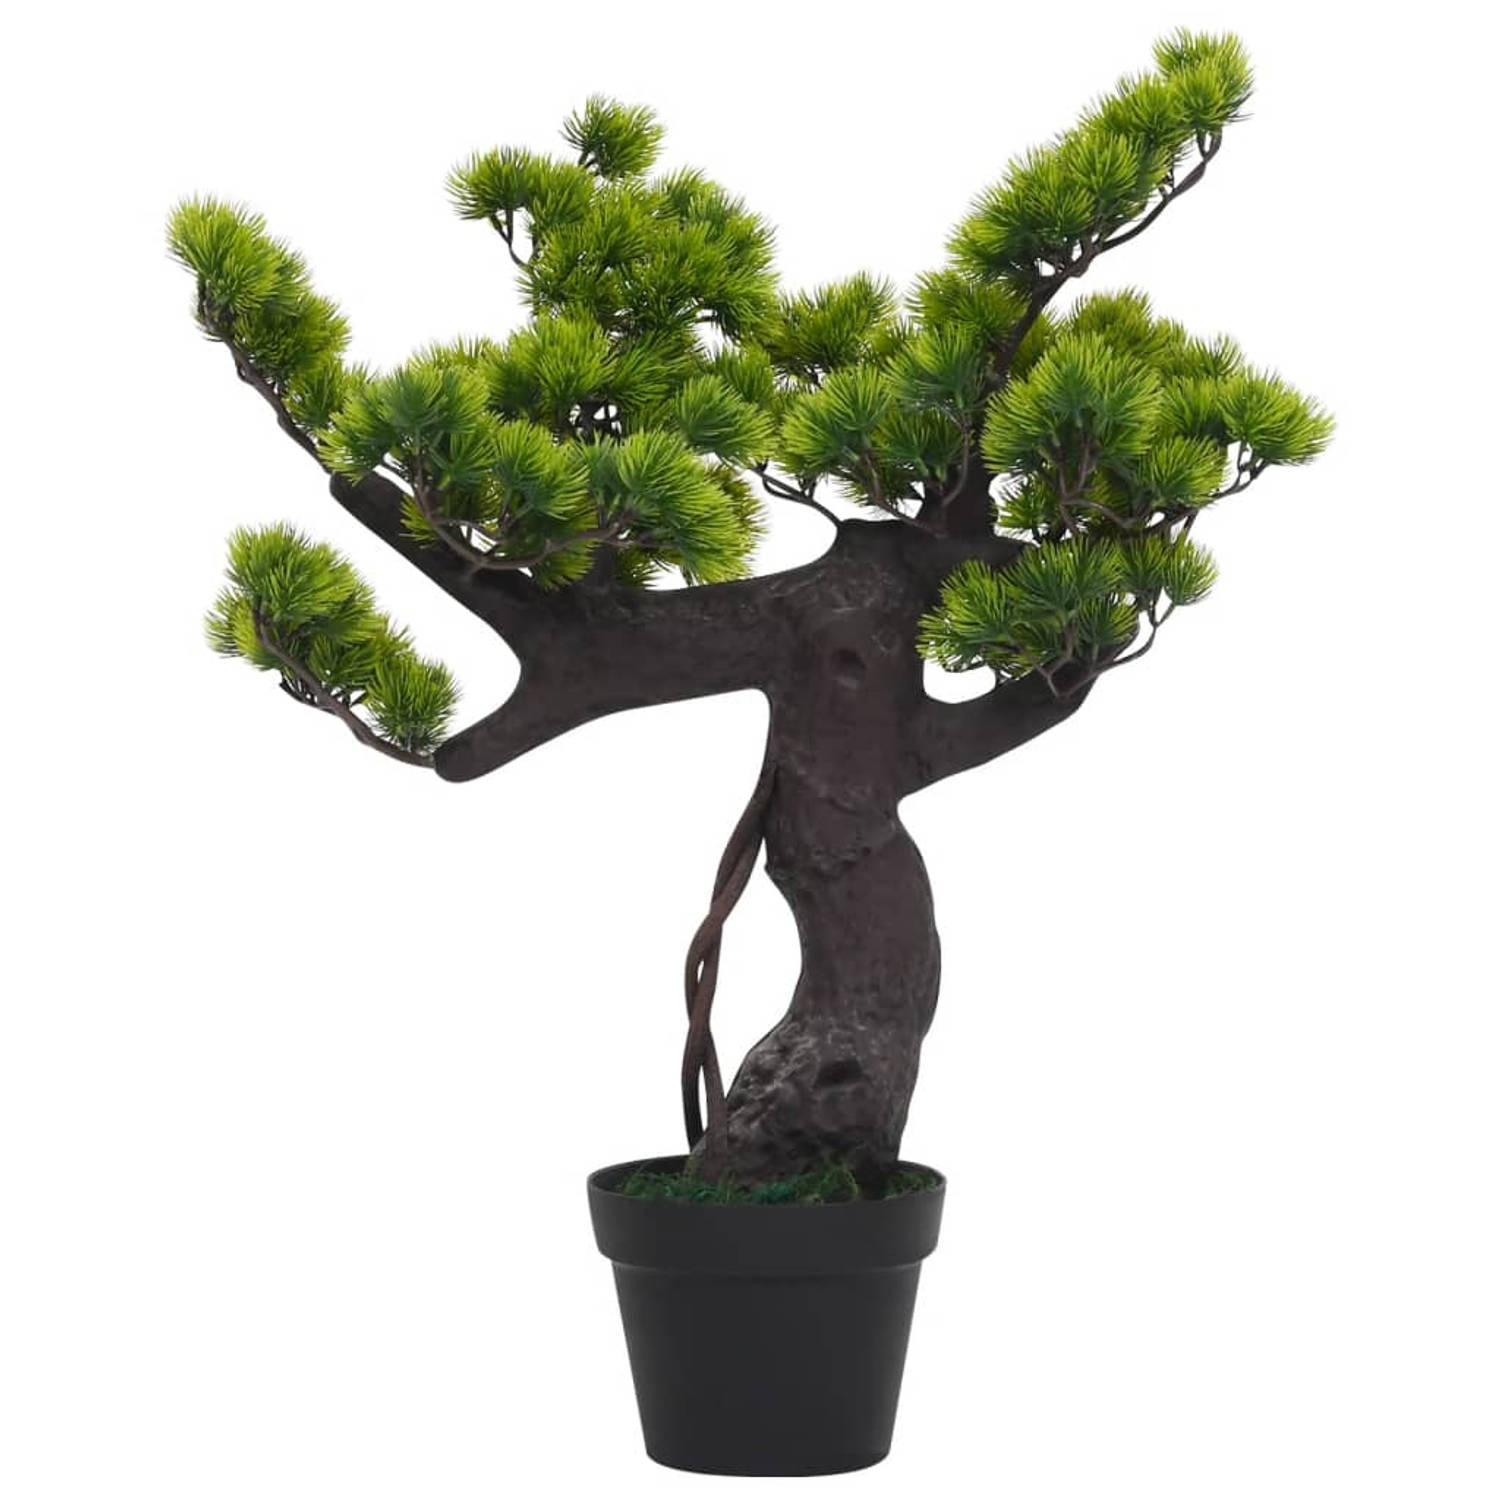 The Living Store Dennen Bonsai Kunstplant - 70 cm - Realistische look - Groen - Kunststof - Pinus Bonsai